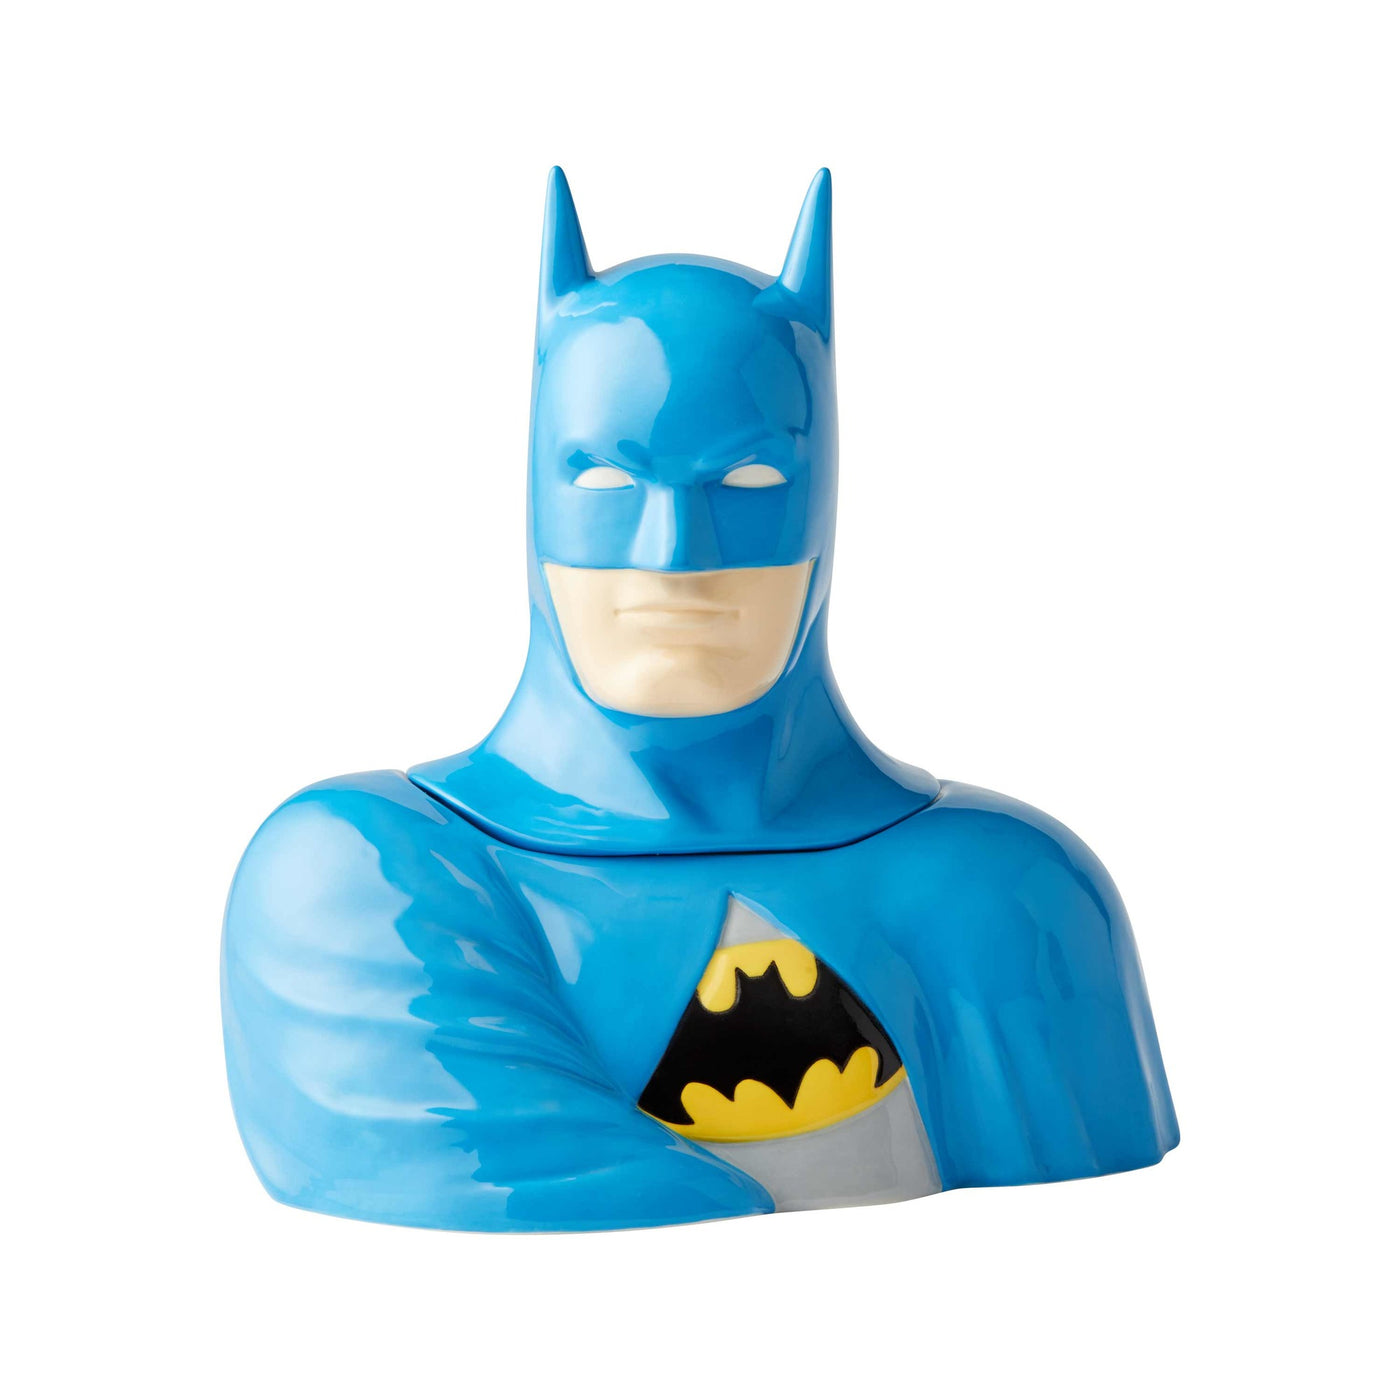 DC Comics Batman Cookie Jar New with Box